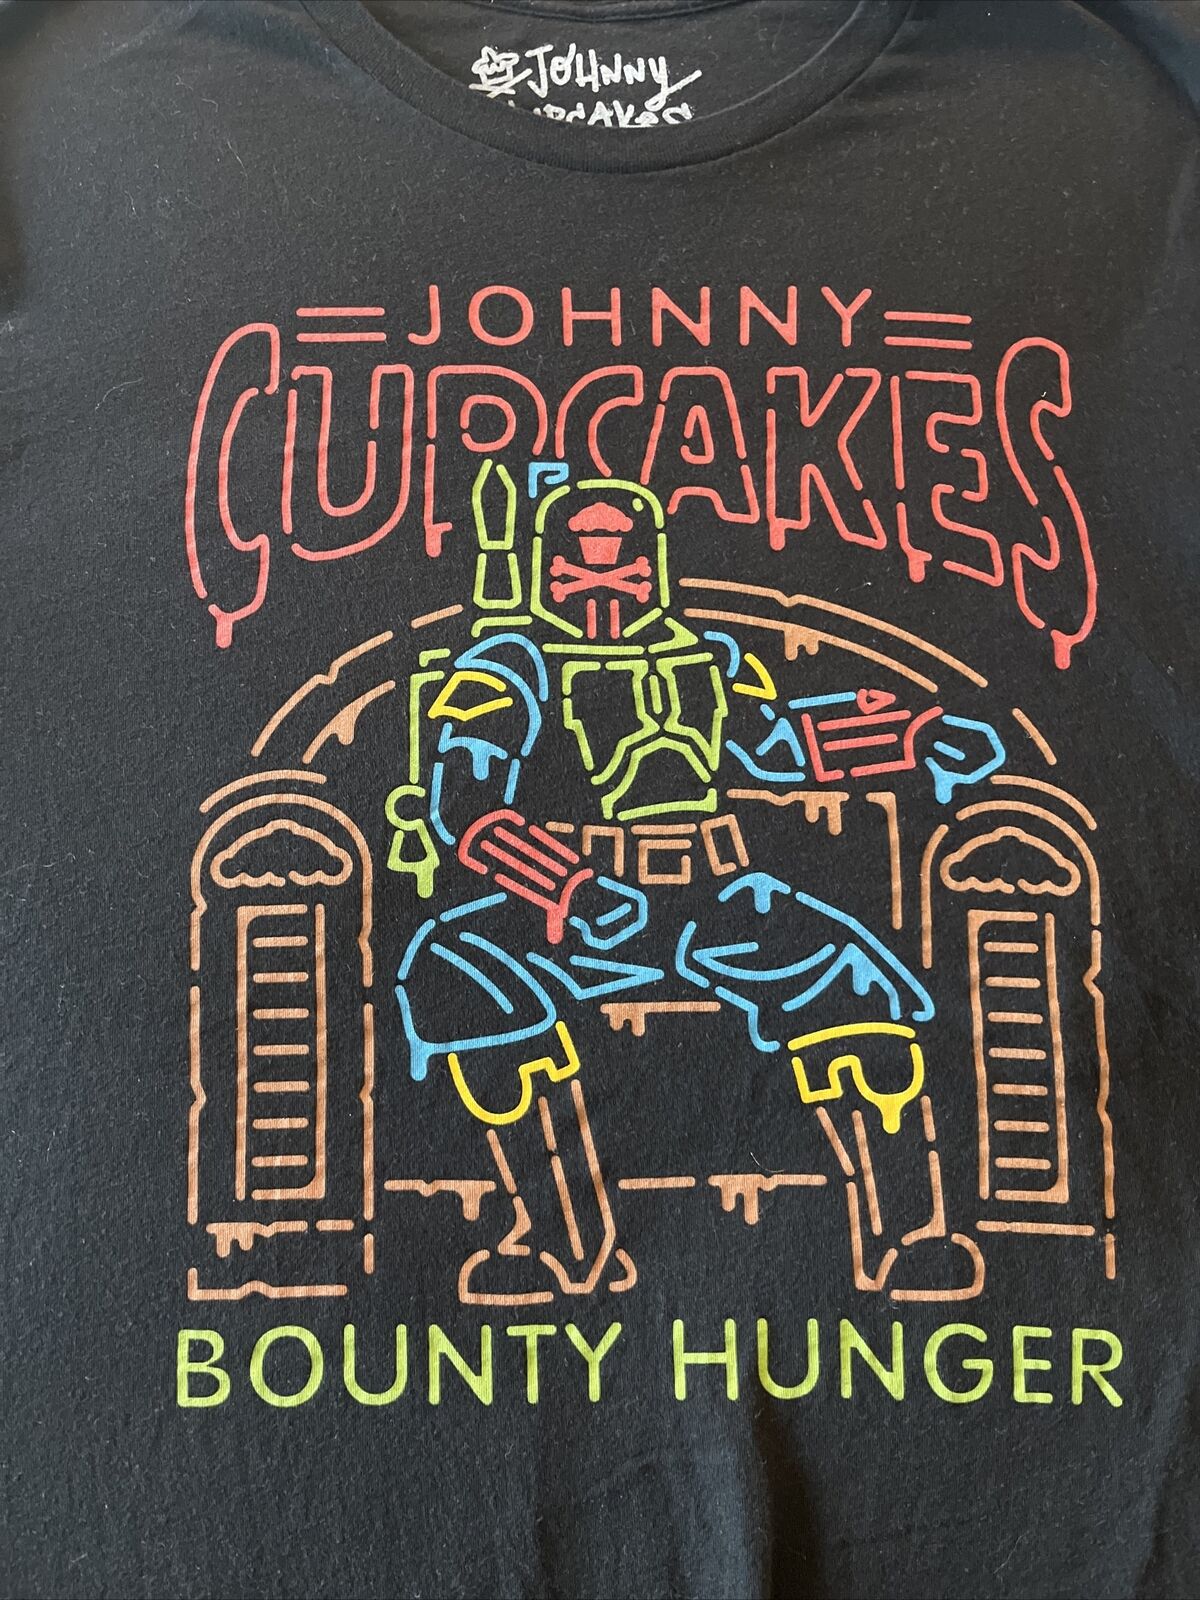 johnny cupcakes shirt - image 1